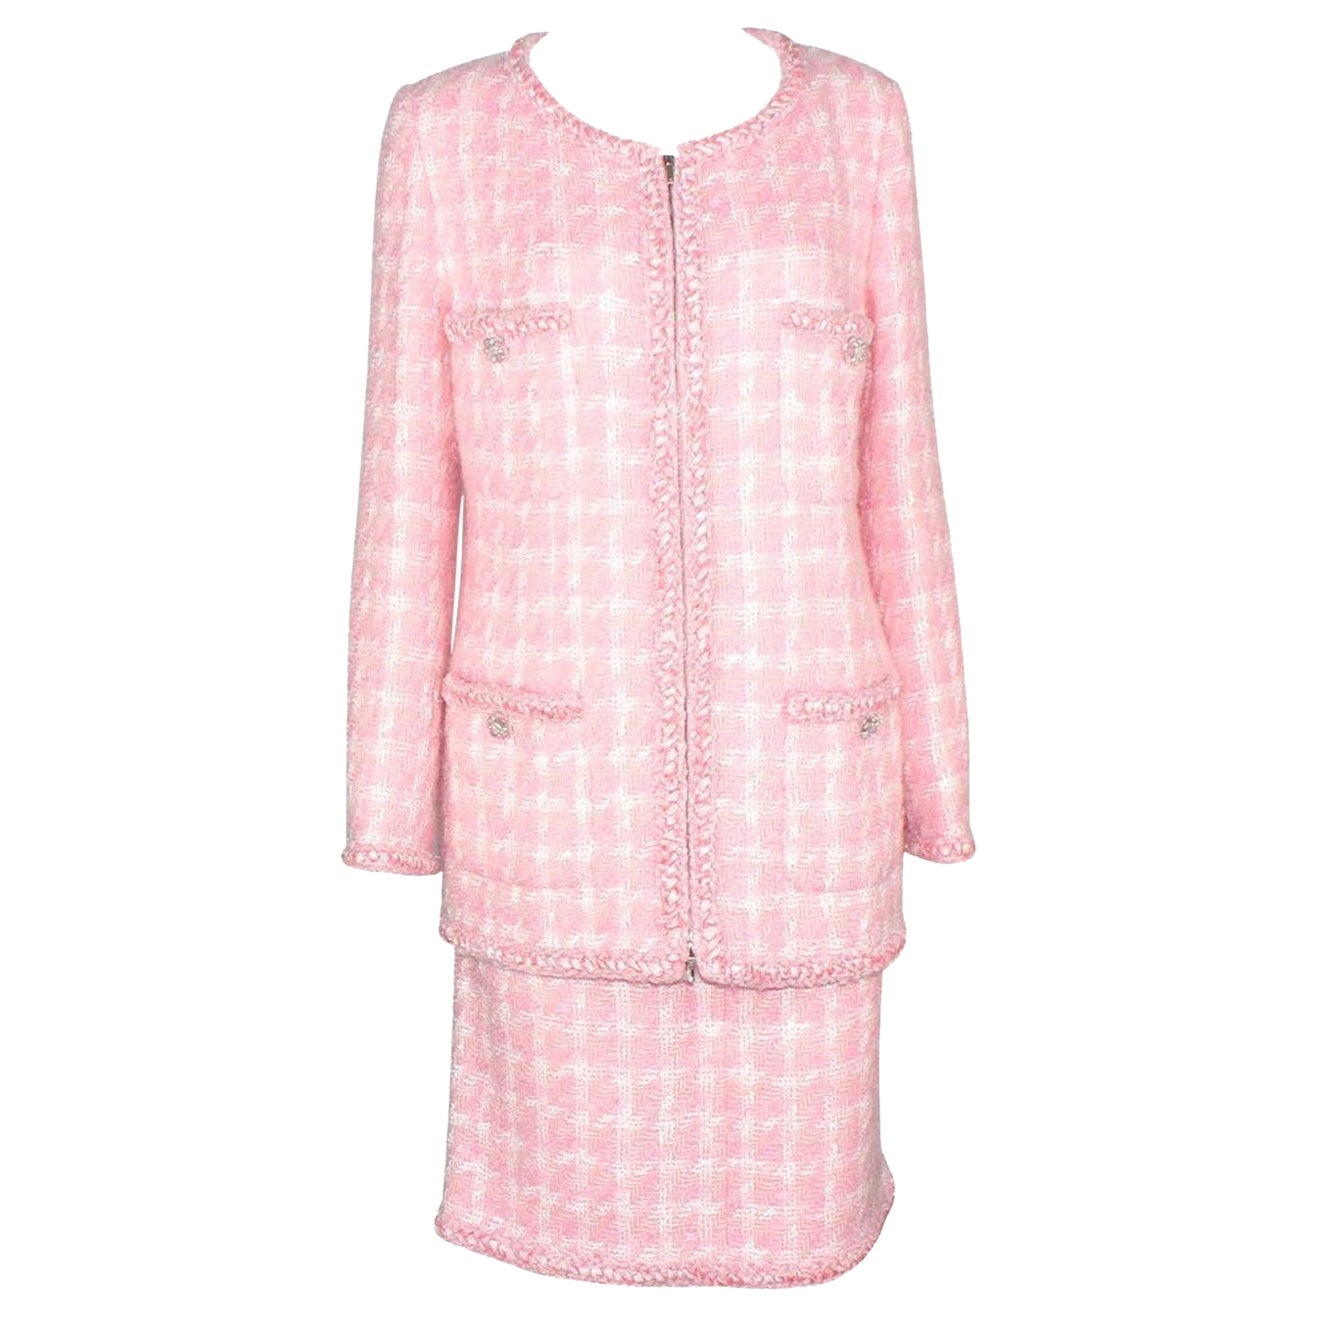 Chanel Pink Skirt - 78 For Sale on 1stDibs